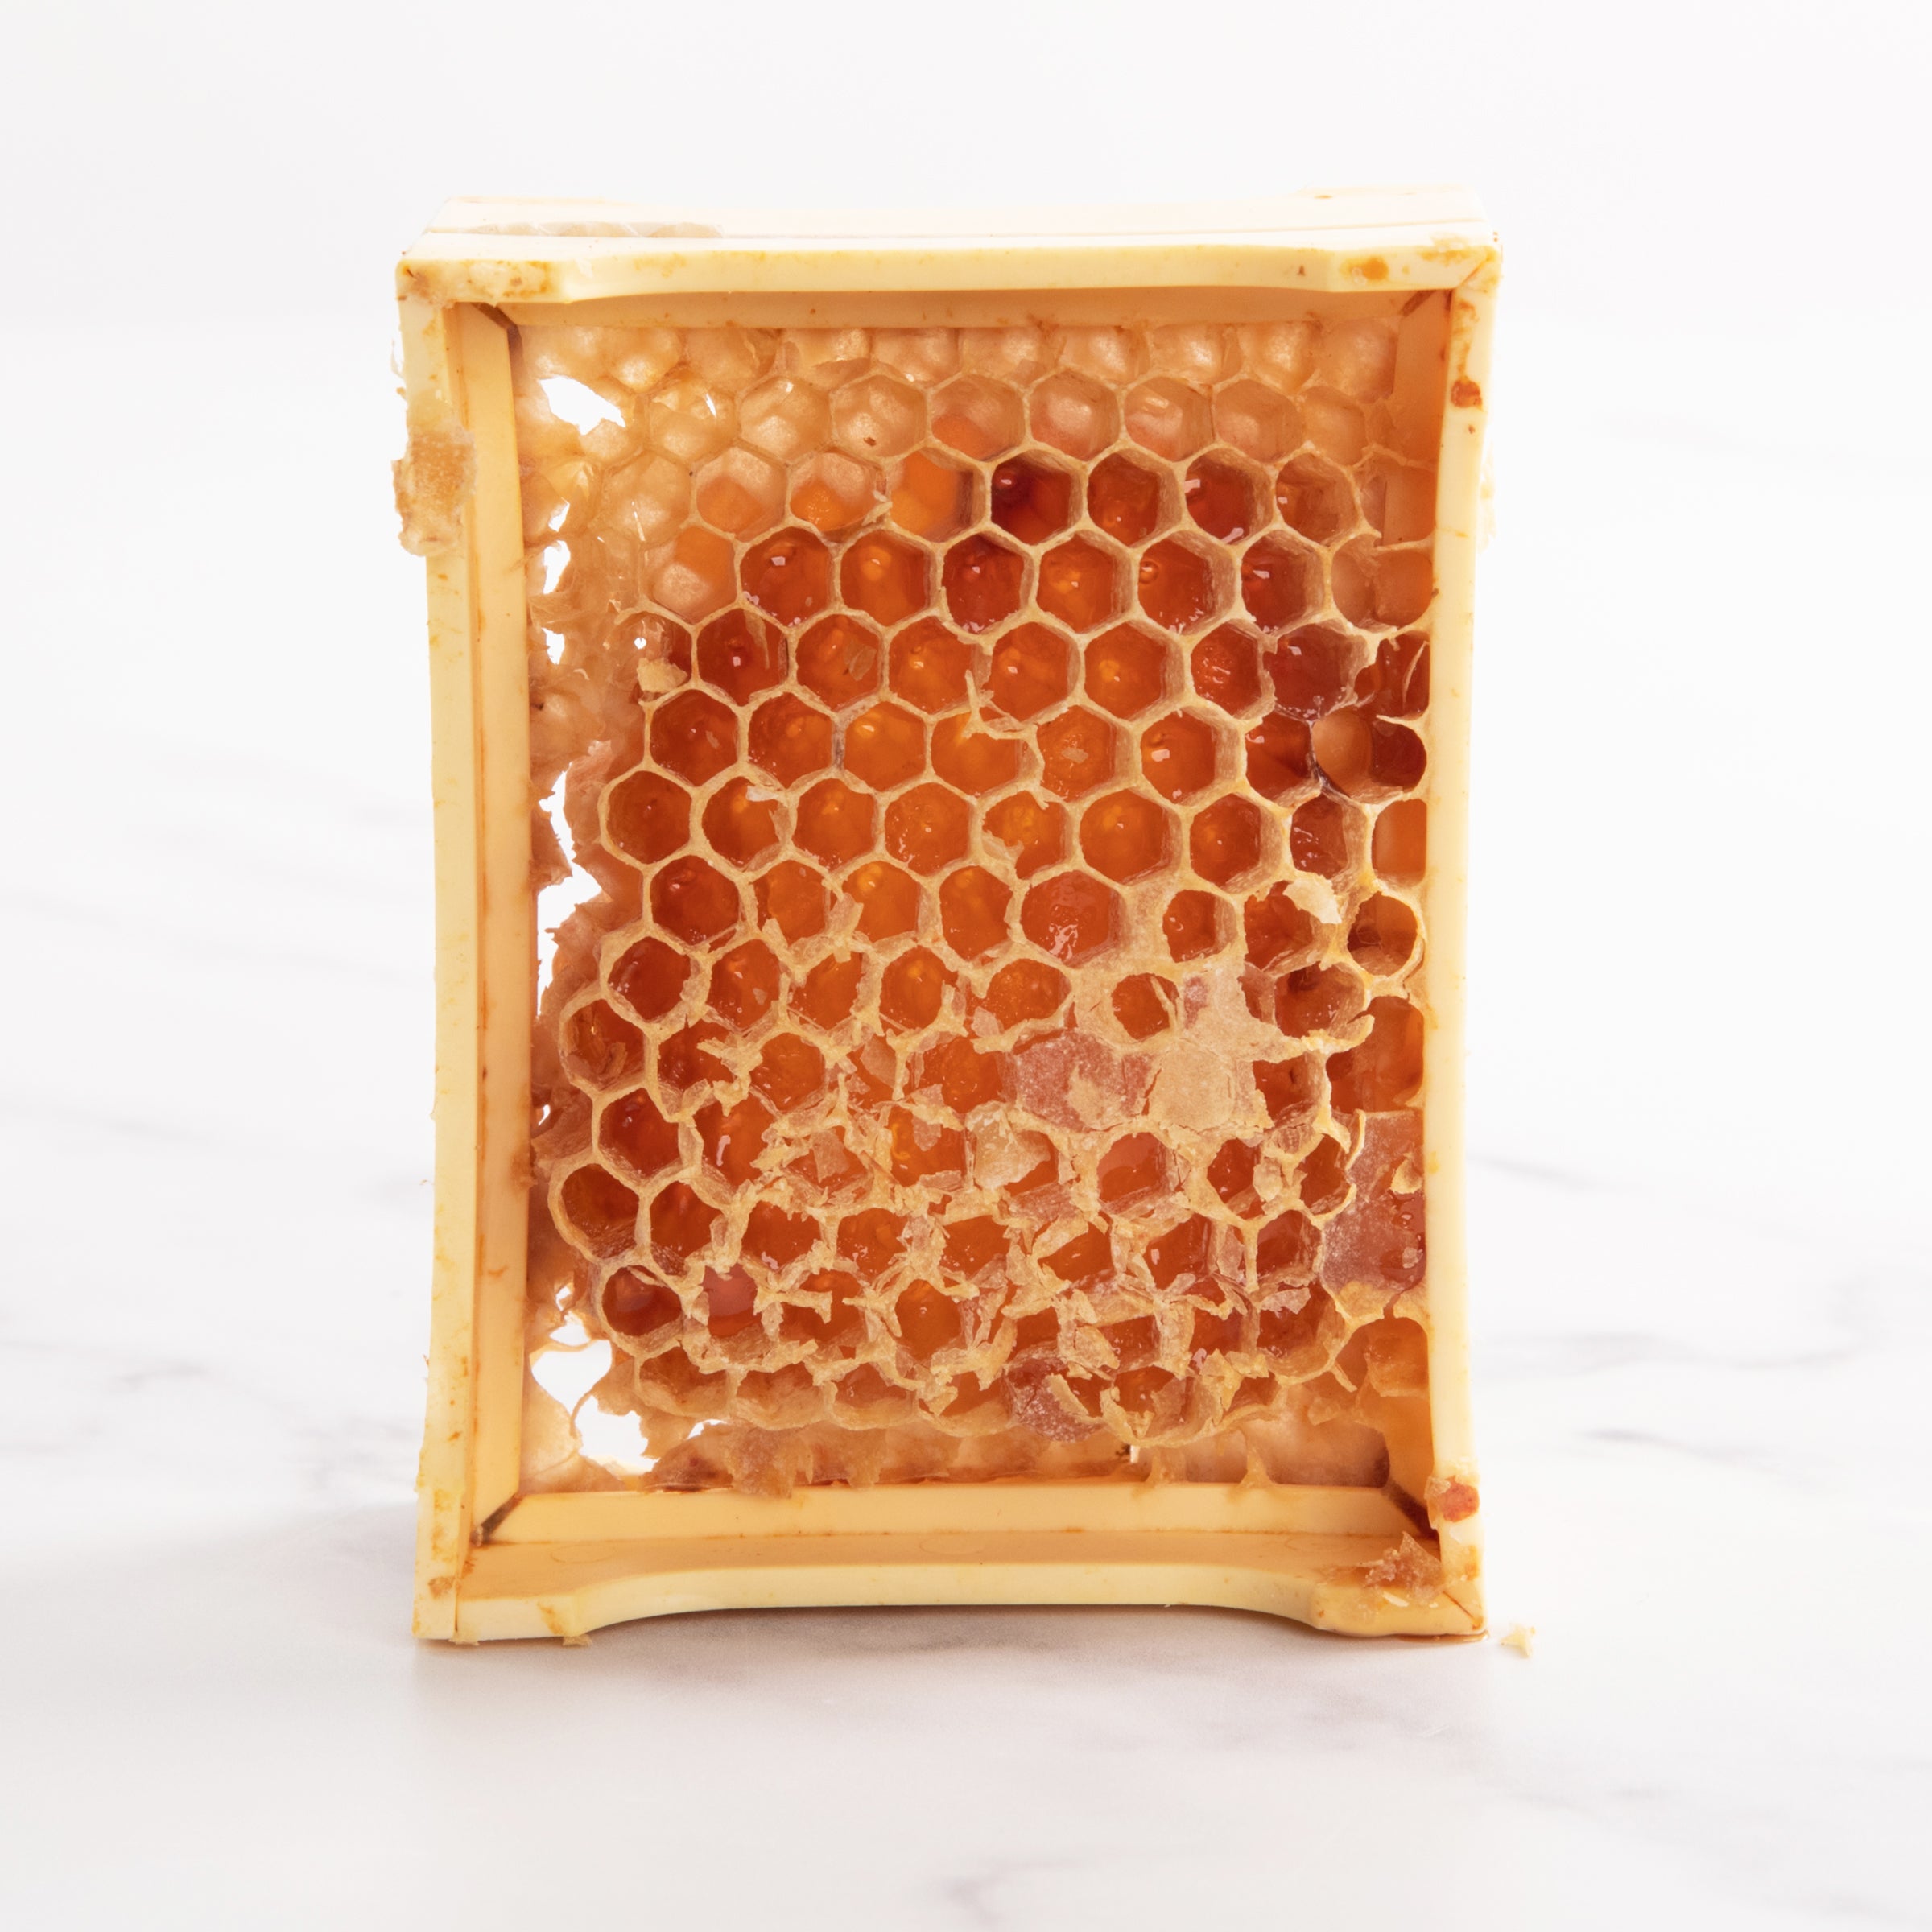 igourmet_8486_pure natural honeycomb_mitica_honey